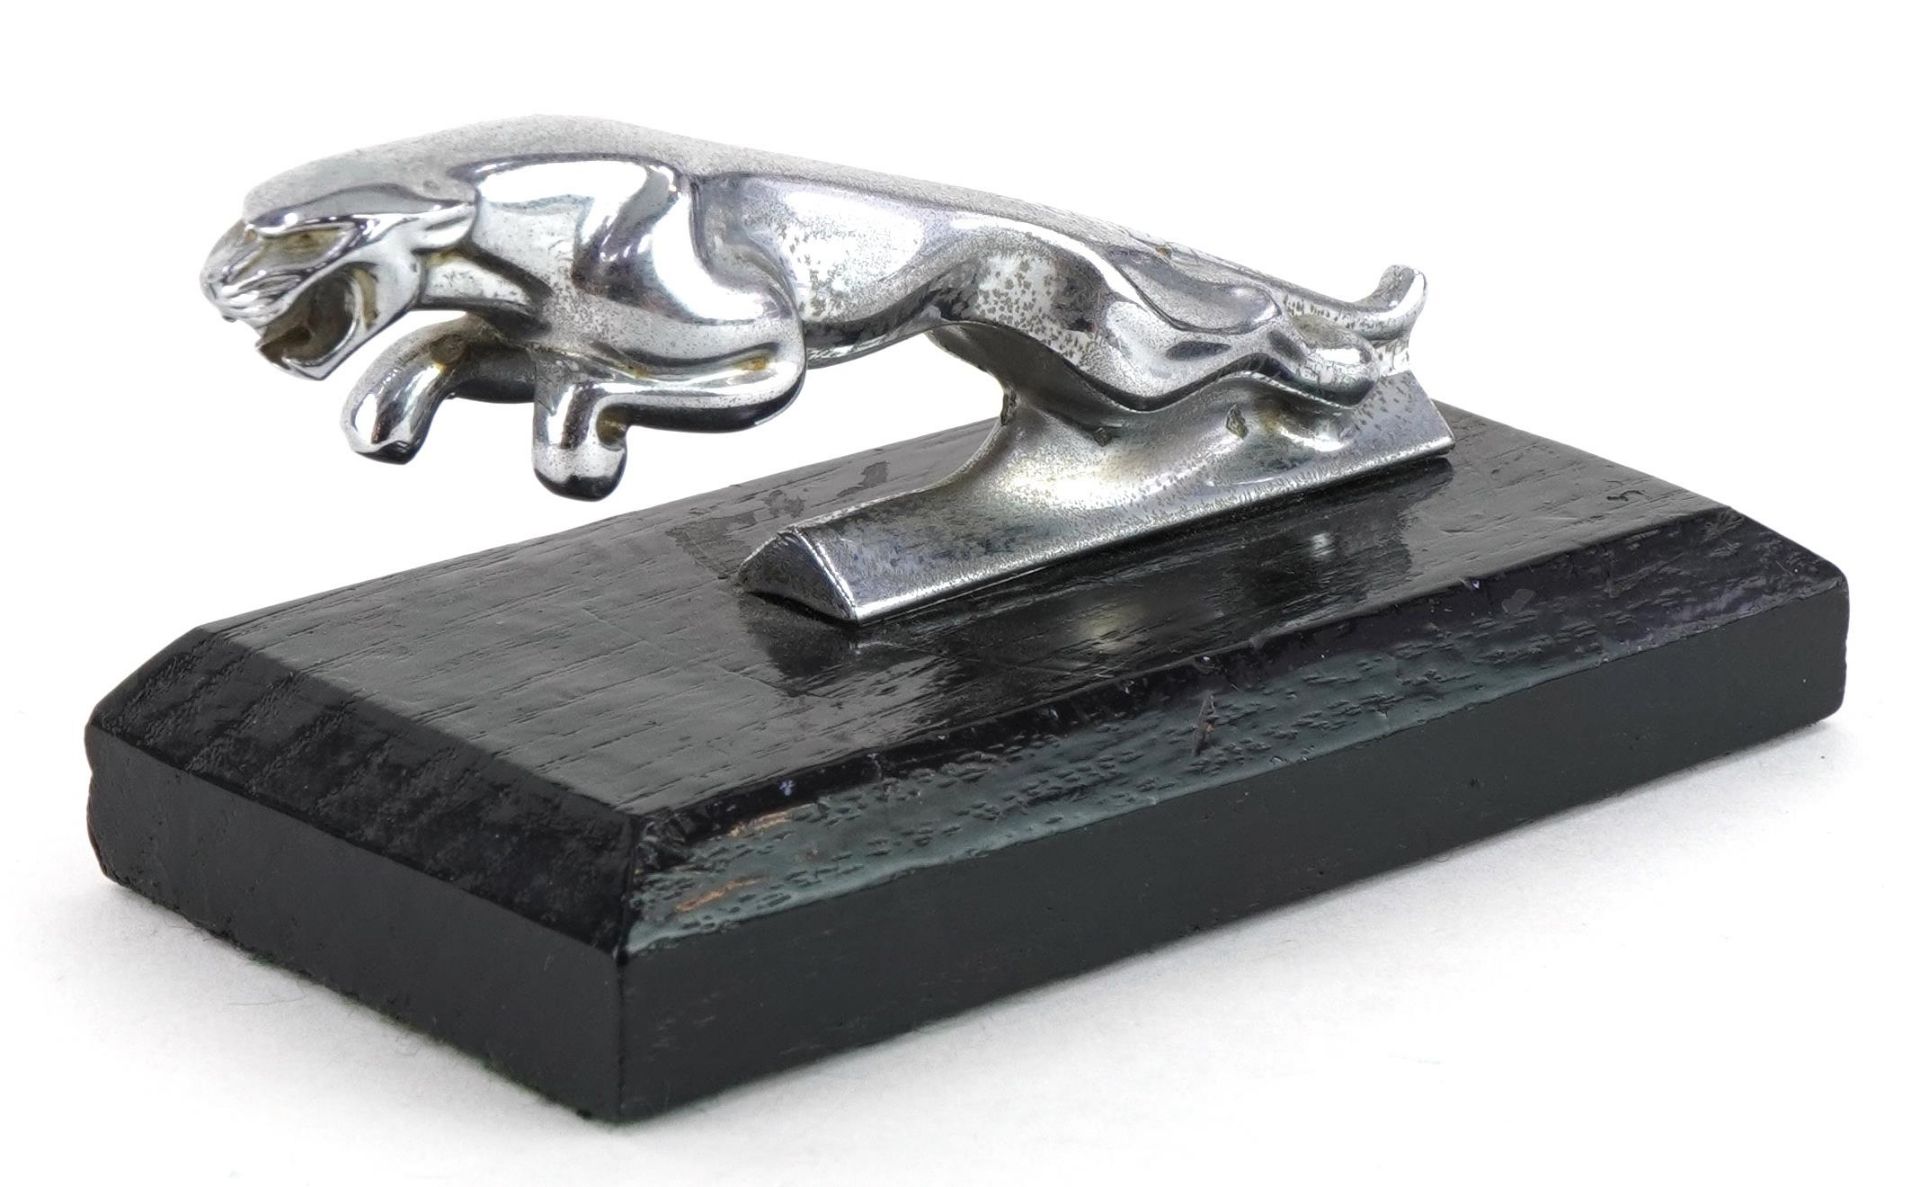 Vintage chrome plated Jaguar car mascot on wooden plinth base, 14cm in length : For further